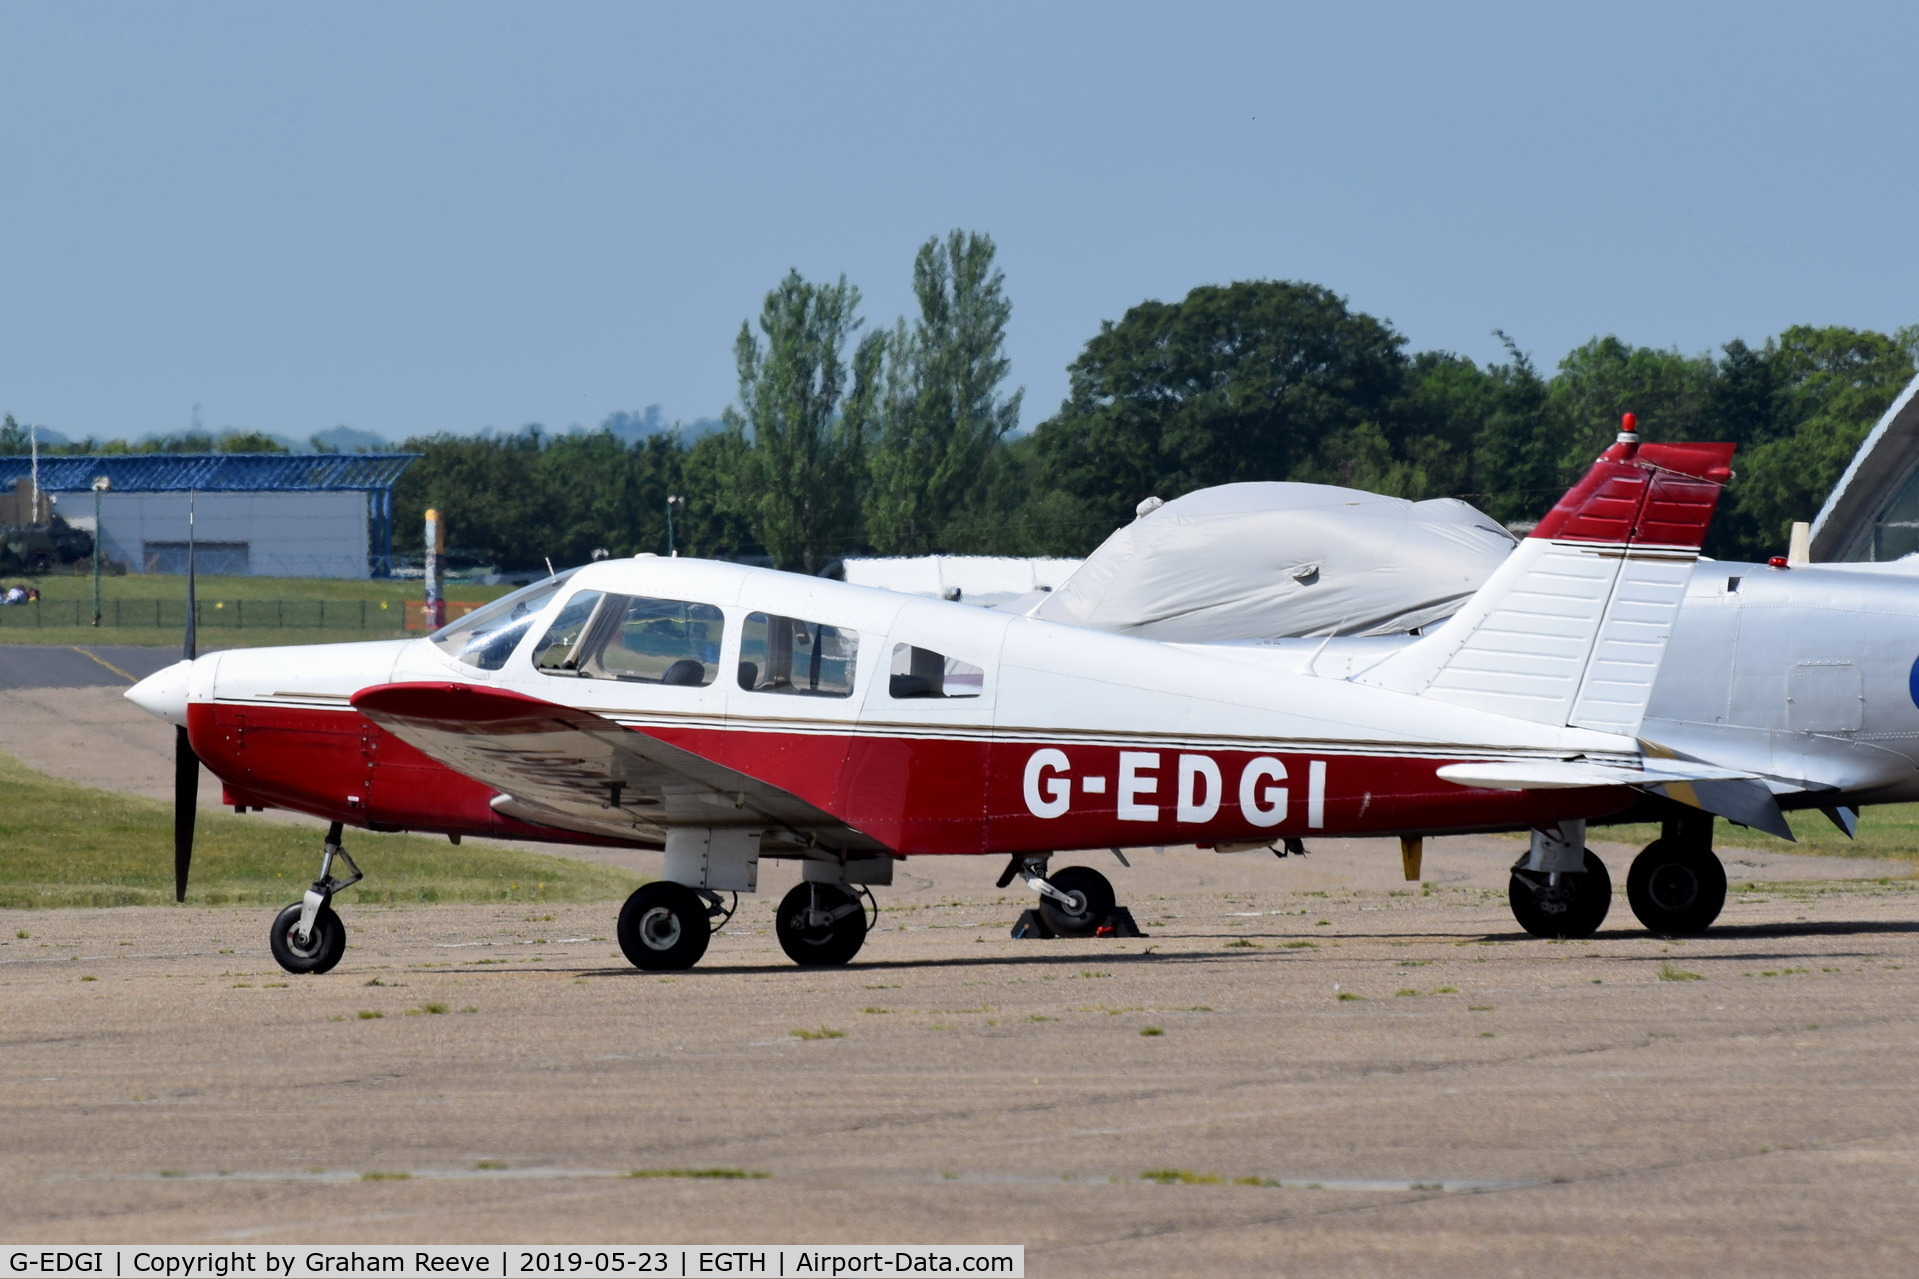 G-EDGI, 1979 Piper PA-28-161 Warrior II C/N 28-7916565, Parked at Duxford.